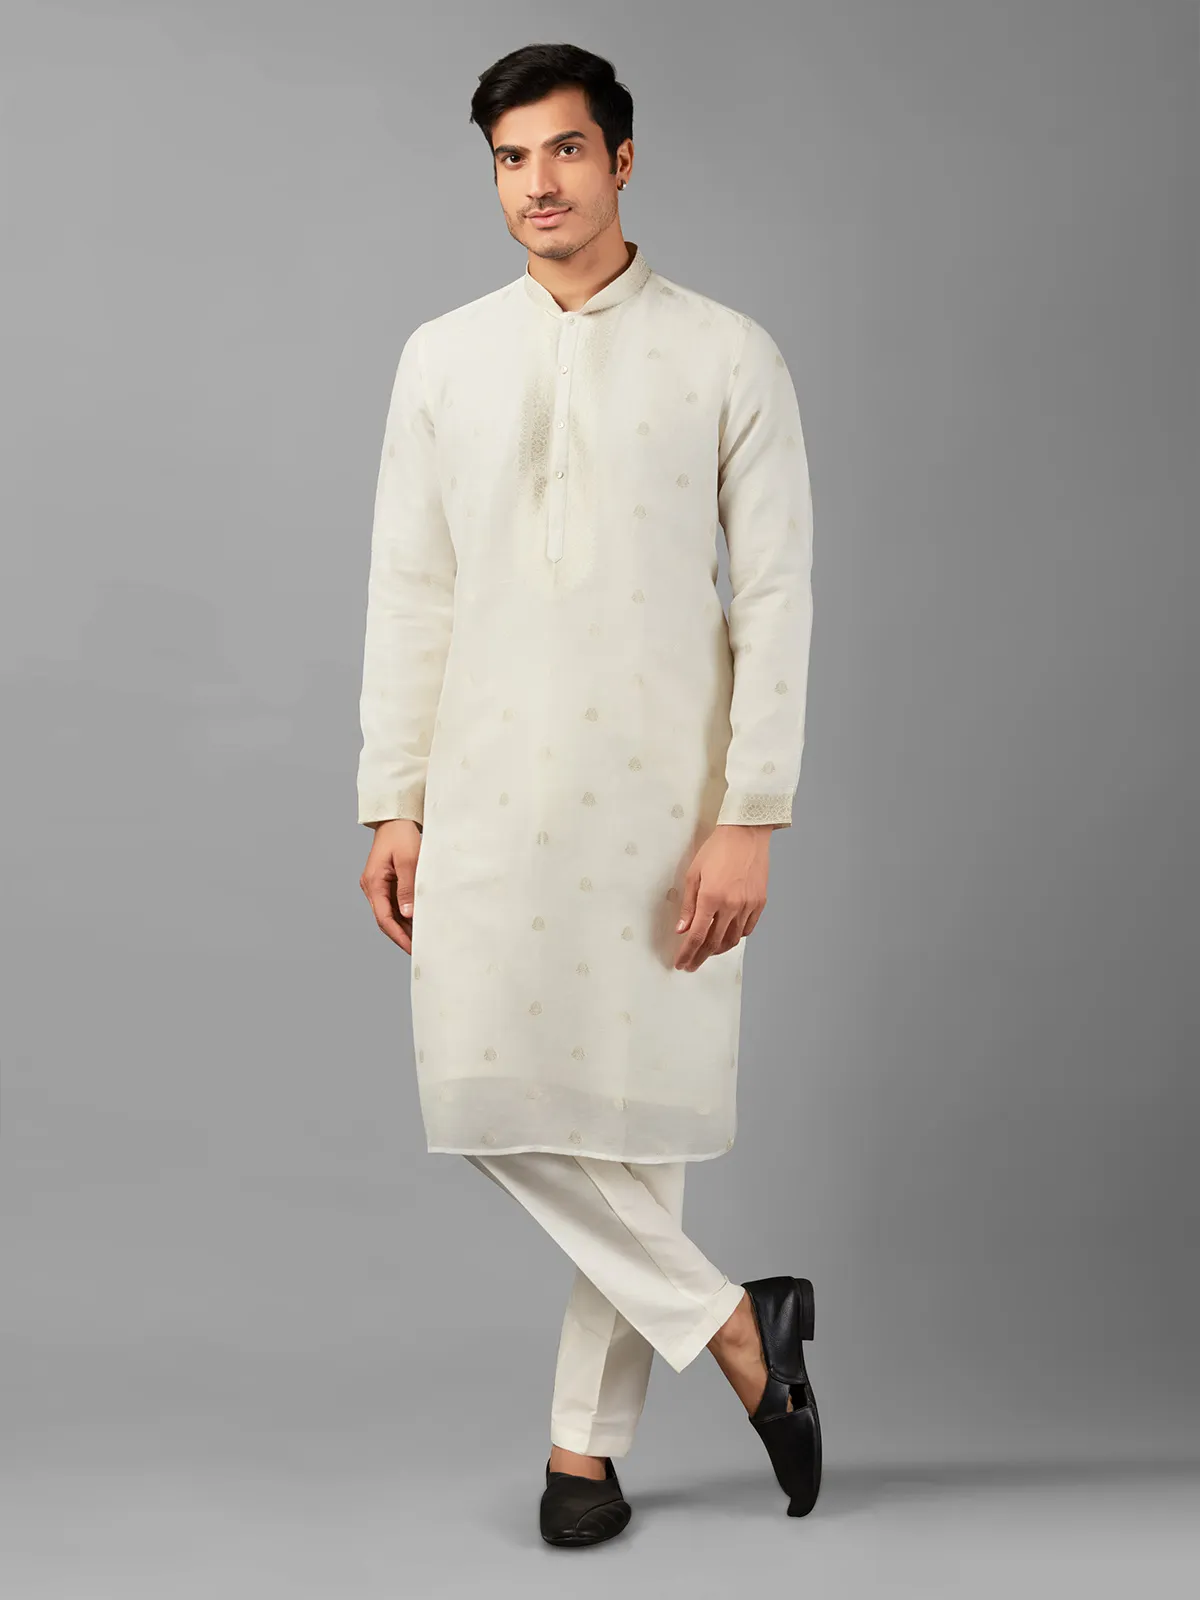 Classy off-white linen kurta suit